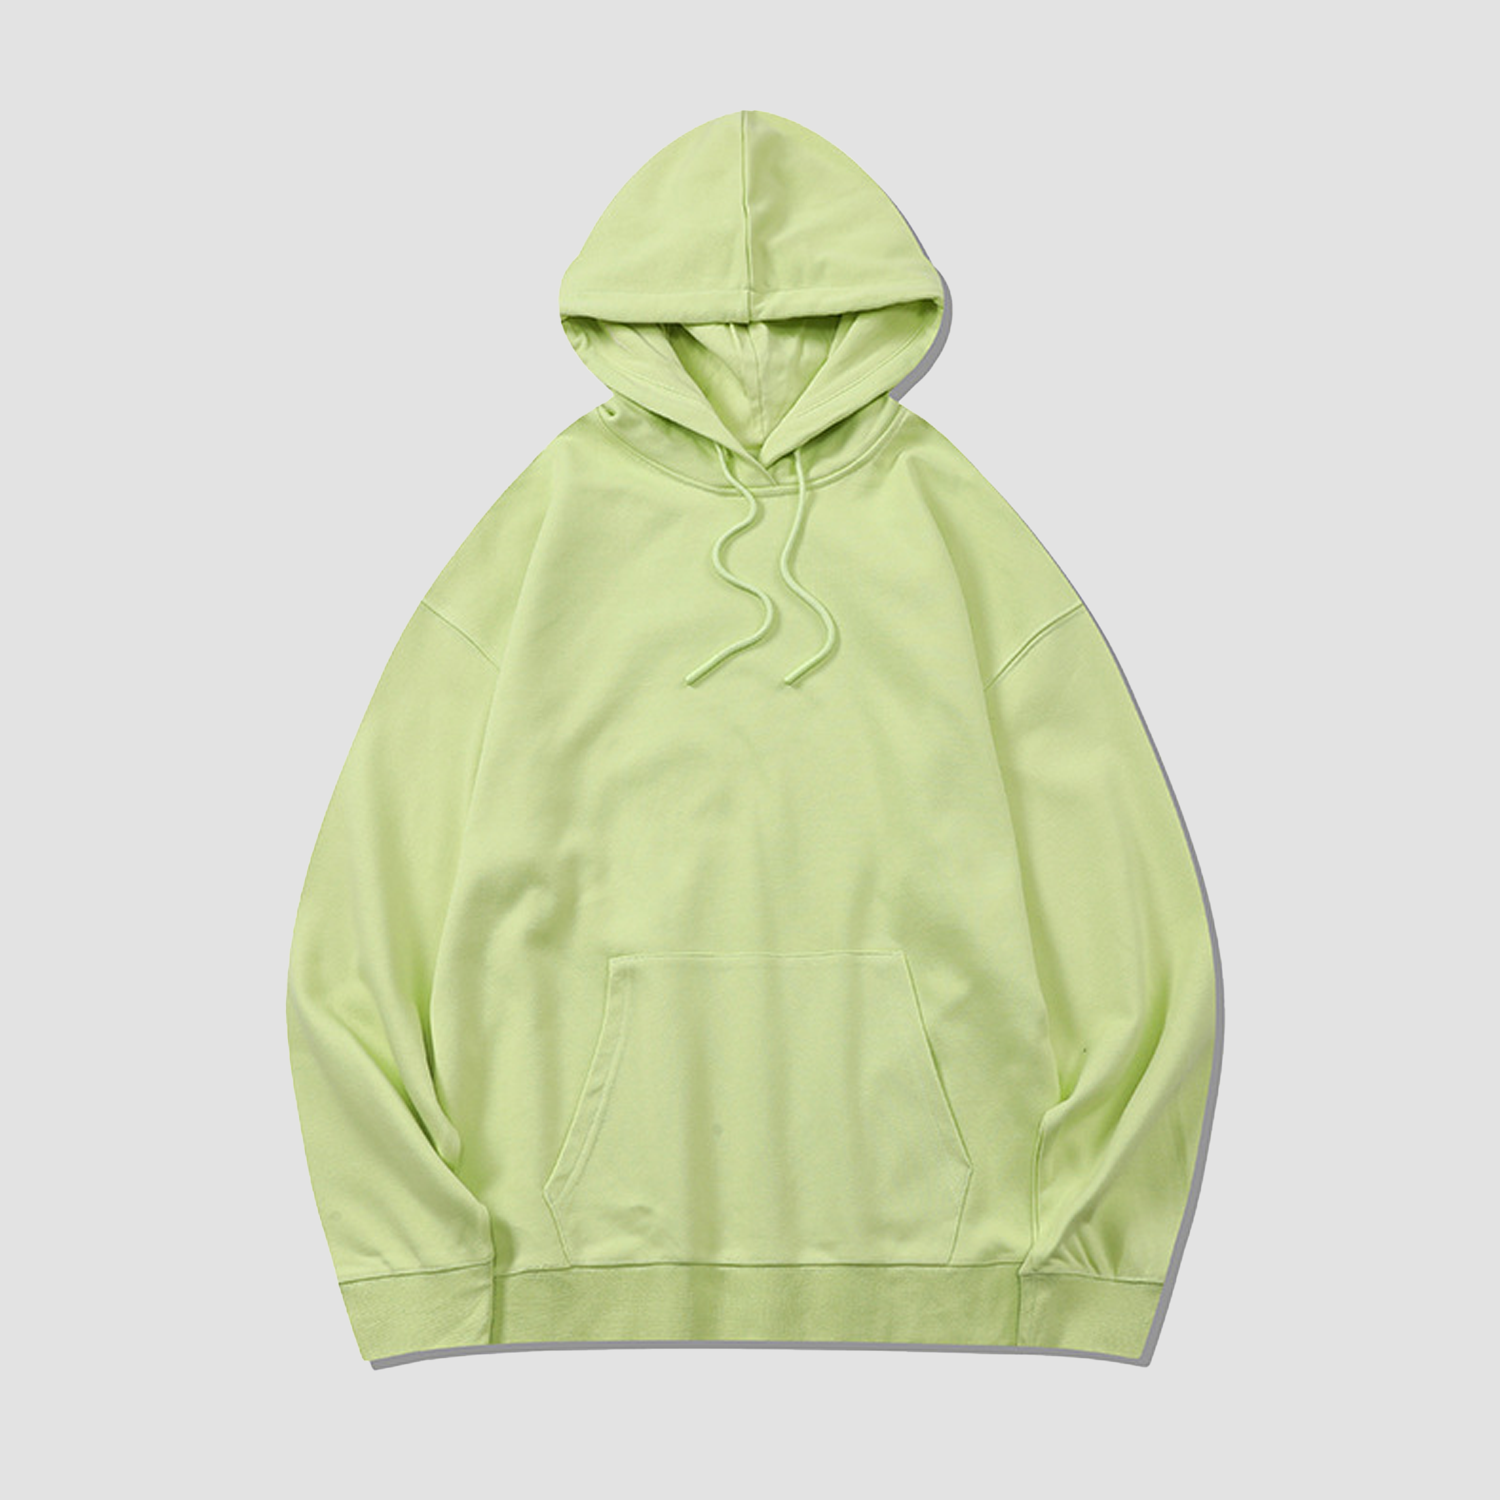 buy hoodies in bulk for cheap